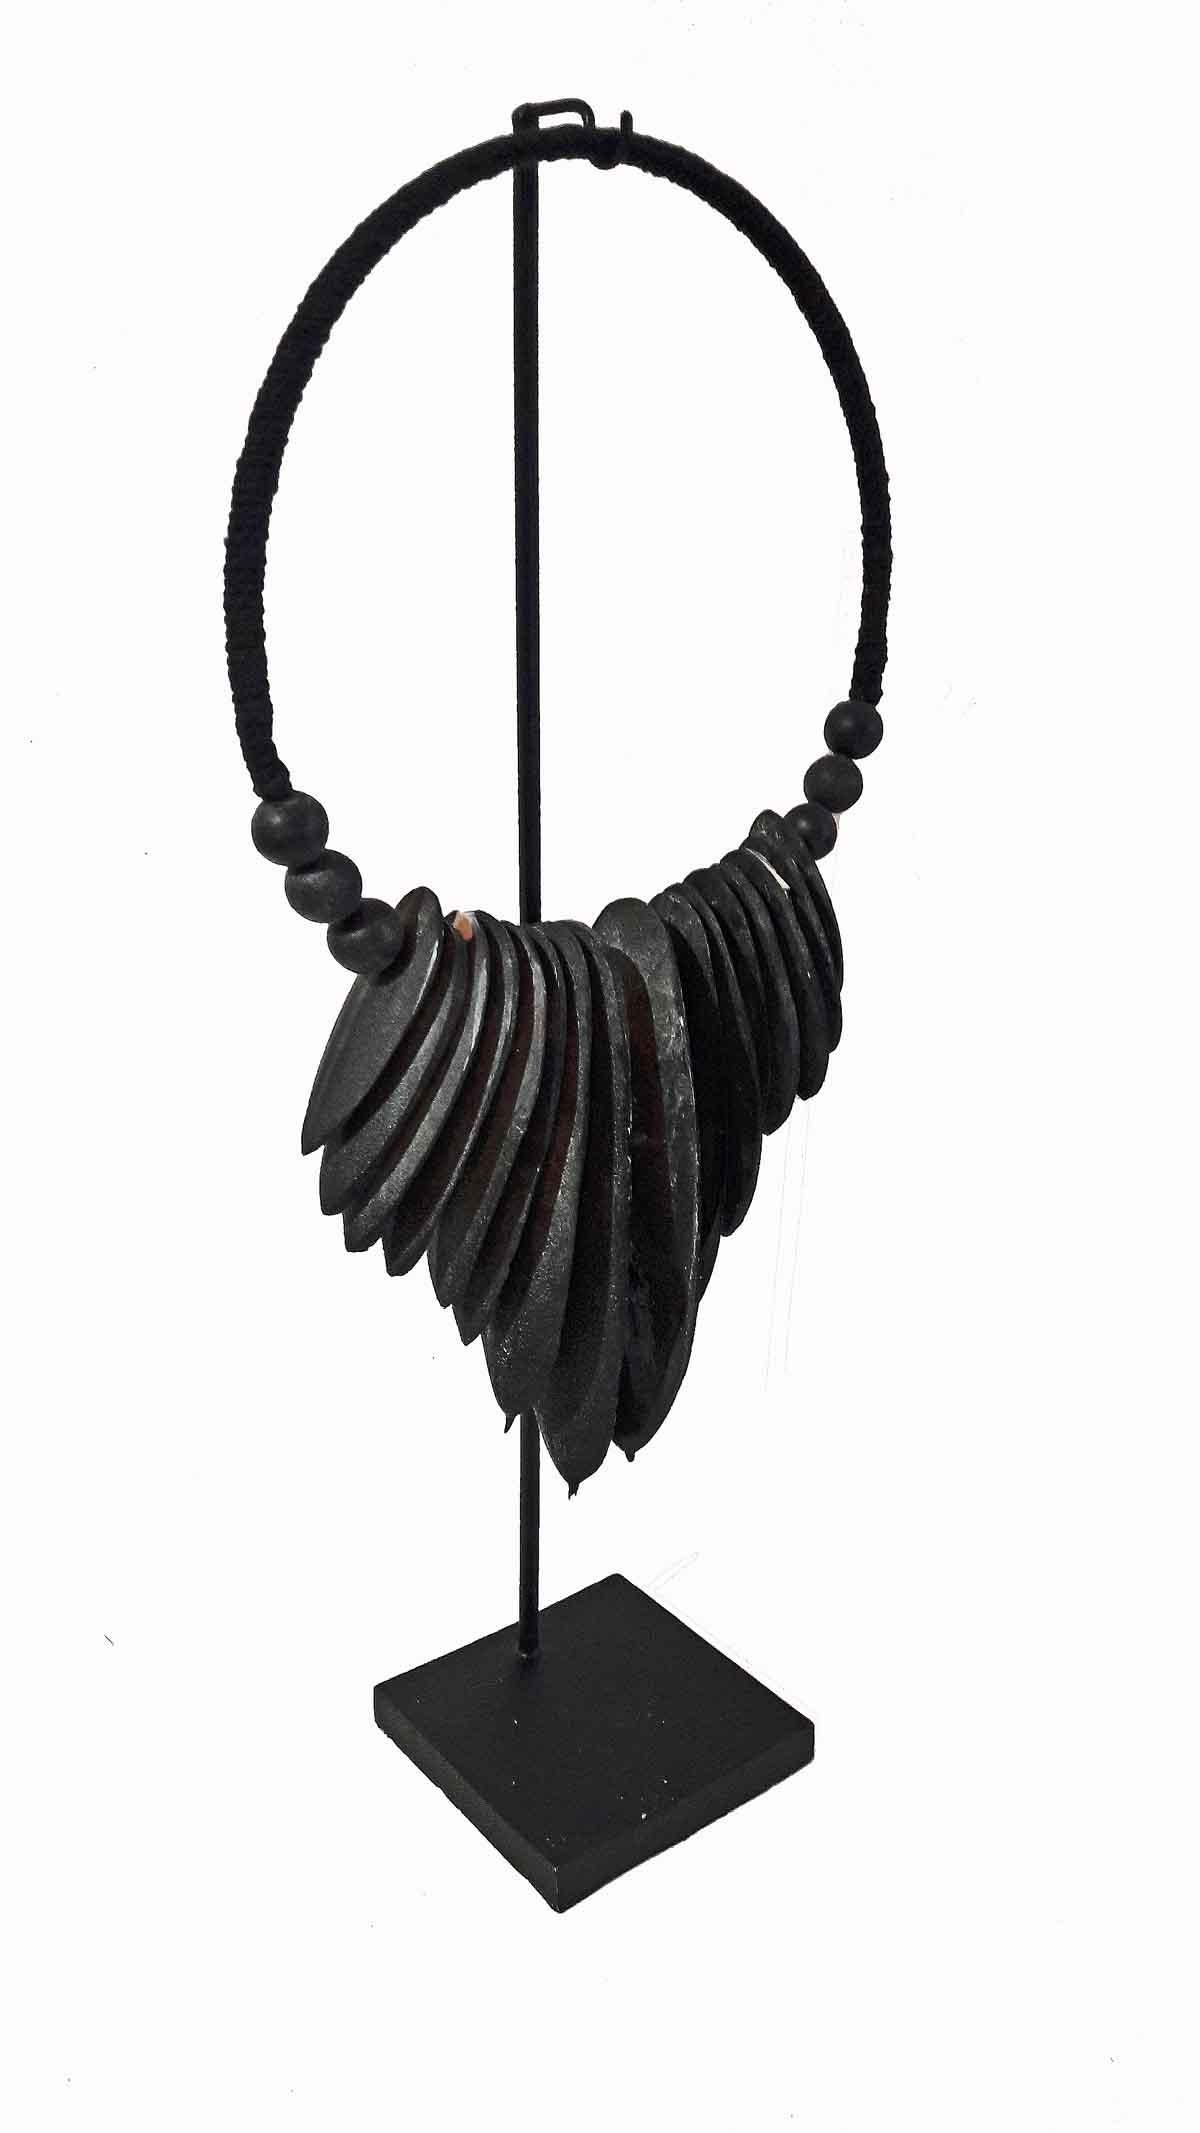  Cuttlebone Decorative Necklace from Bali 1